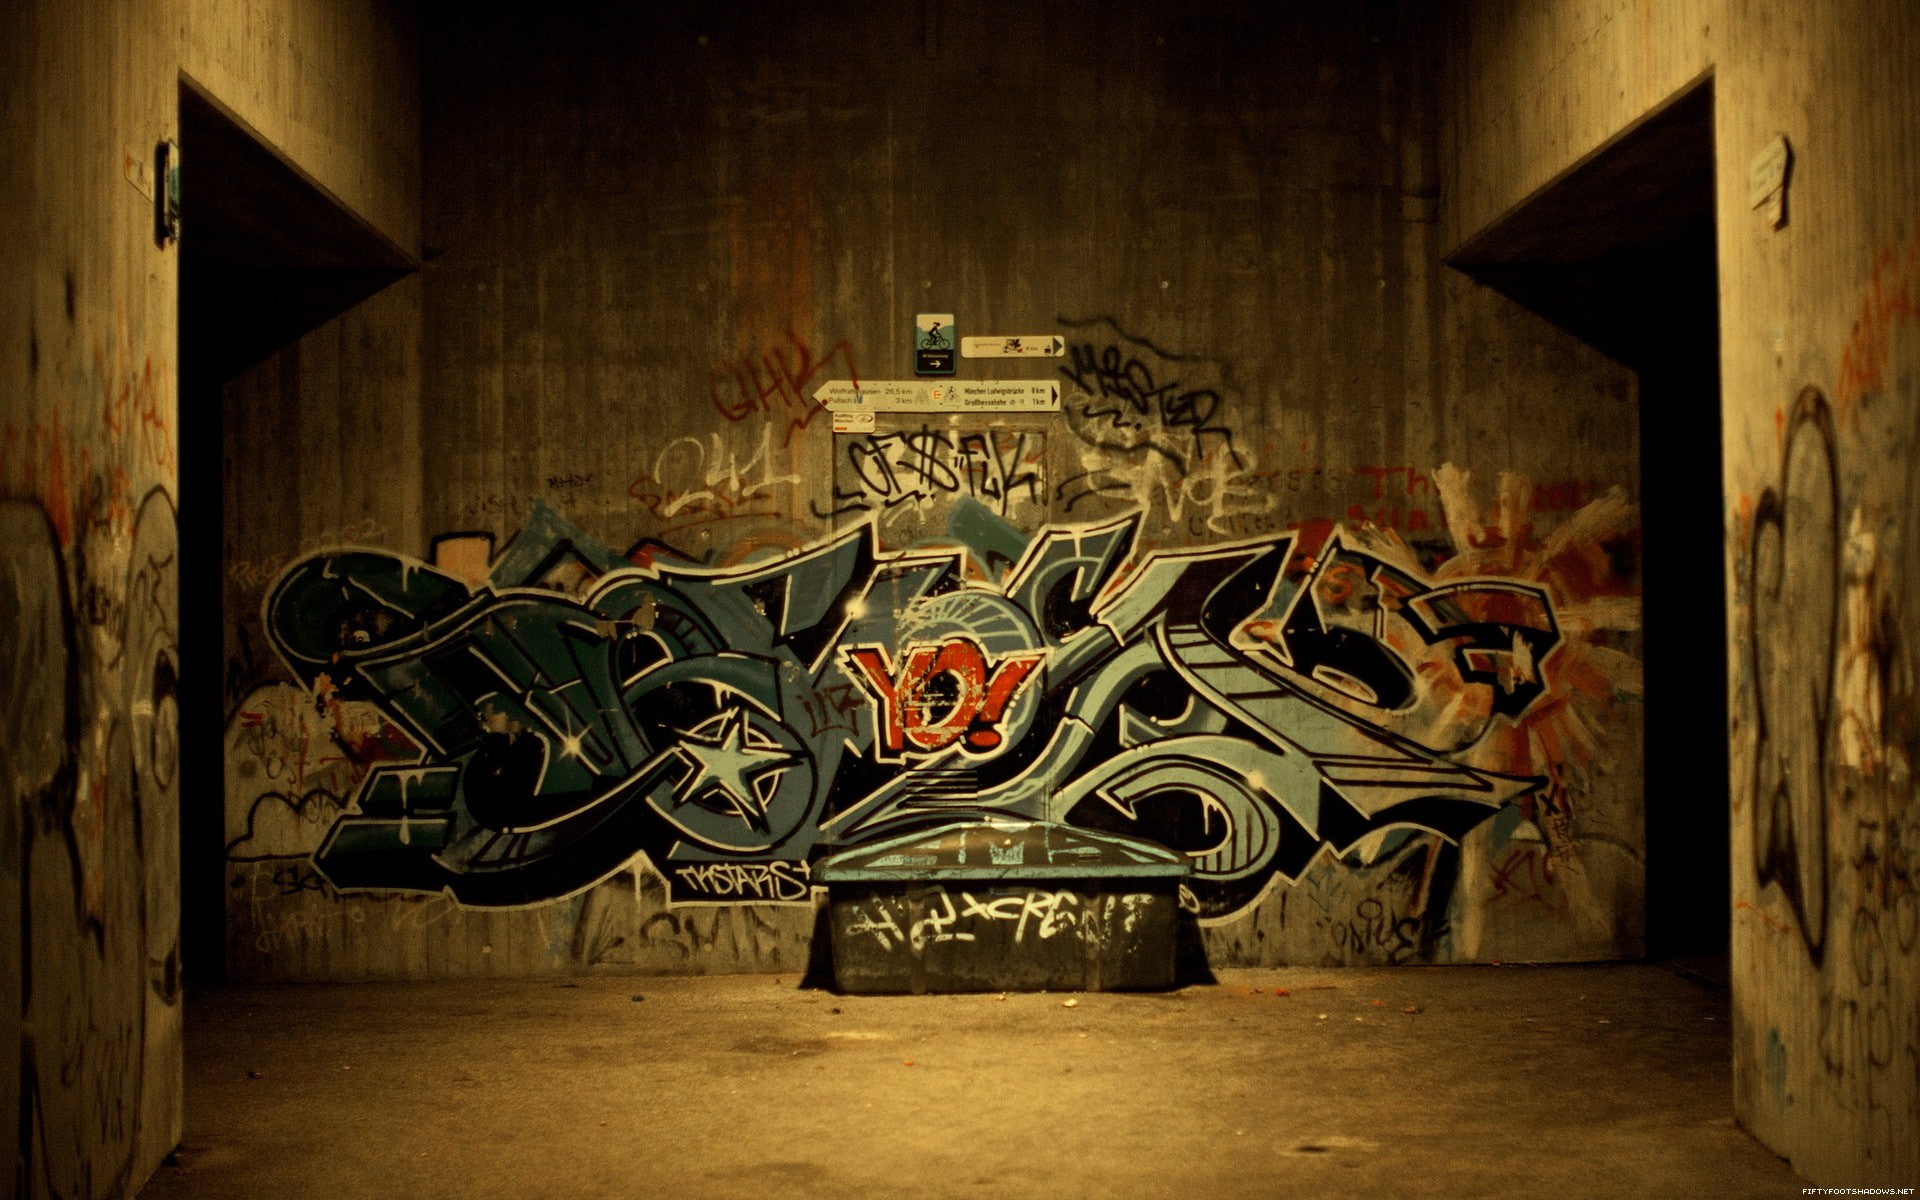 graffiti, wall, urban, dirt